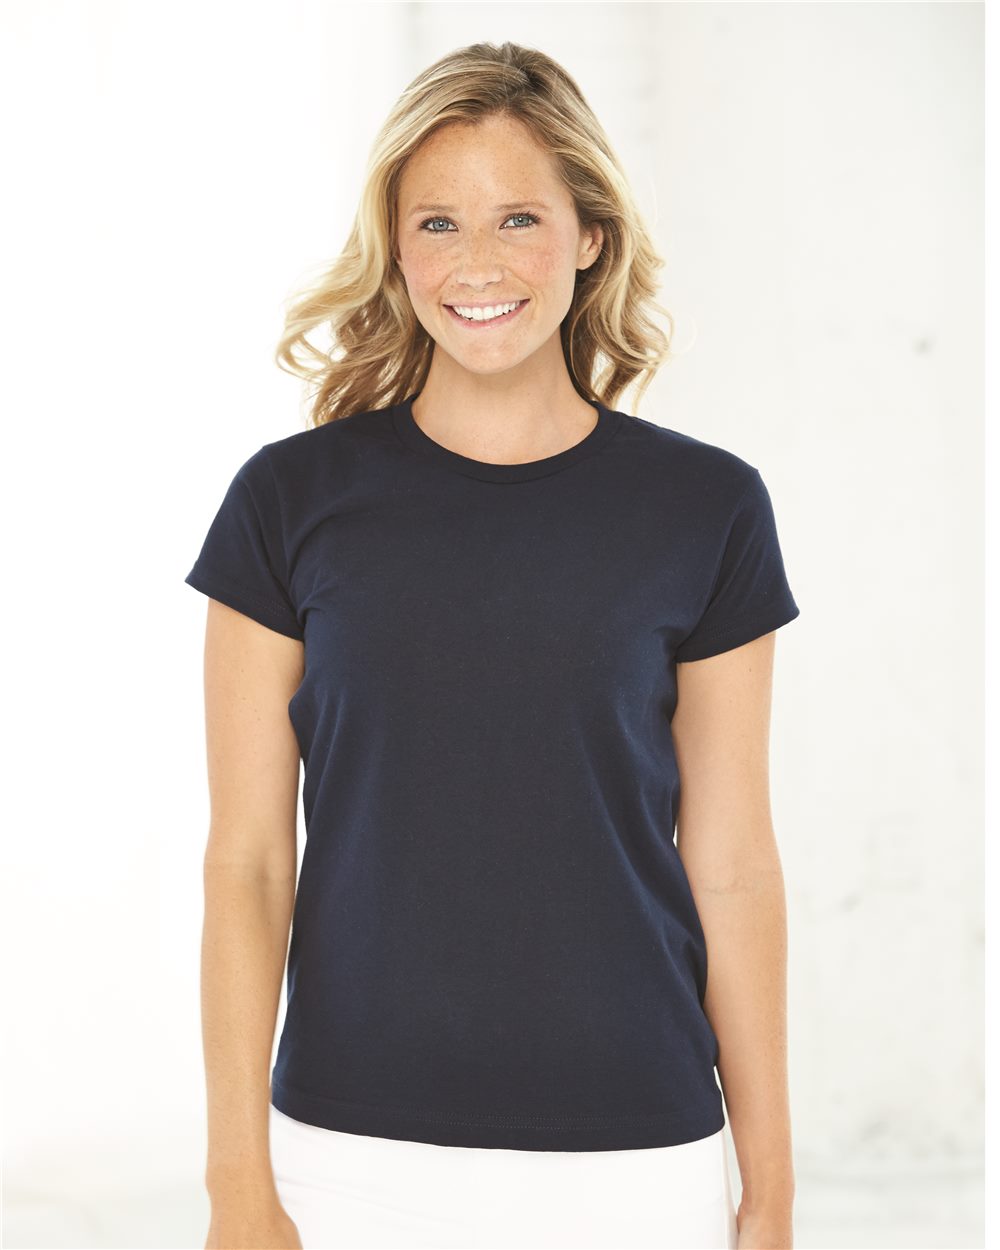 Bayside 3325 - Women's USA-Made T-Shirt